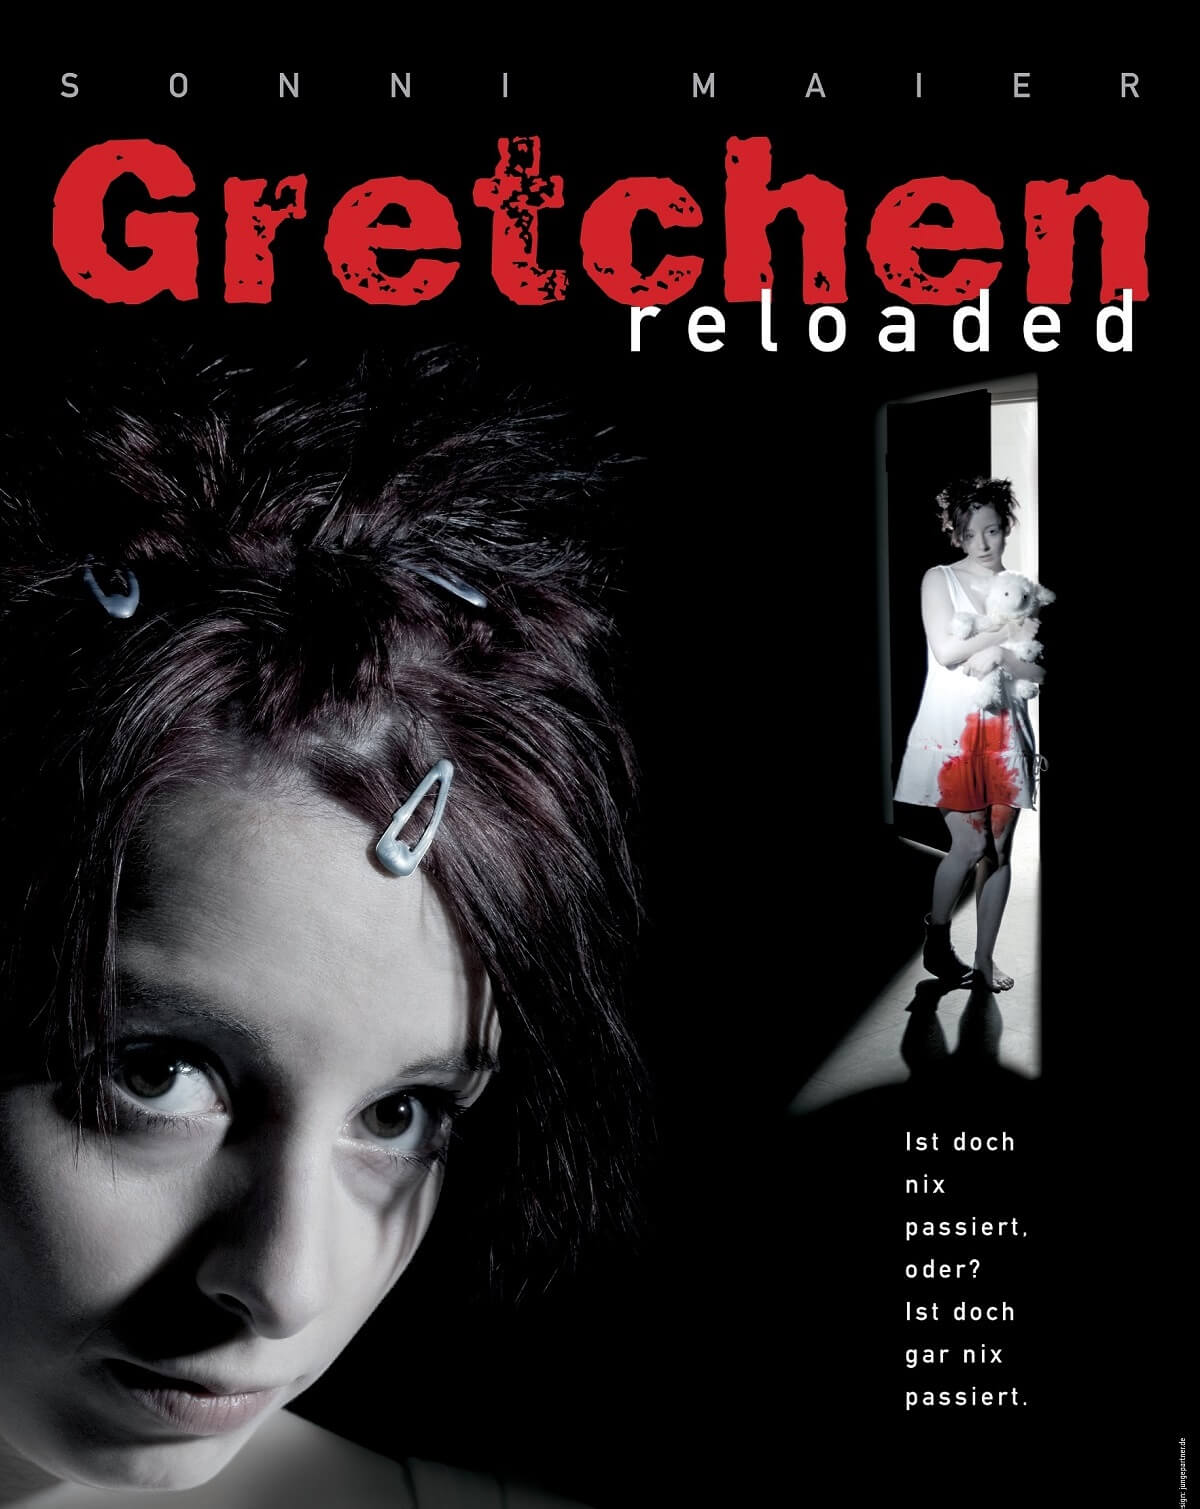 Gretchen reloaded